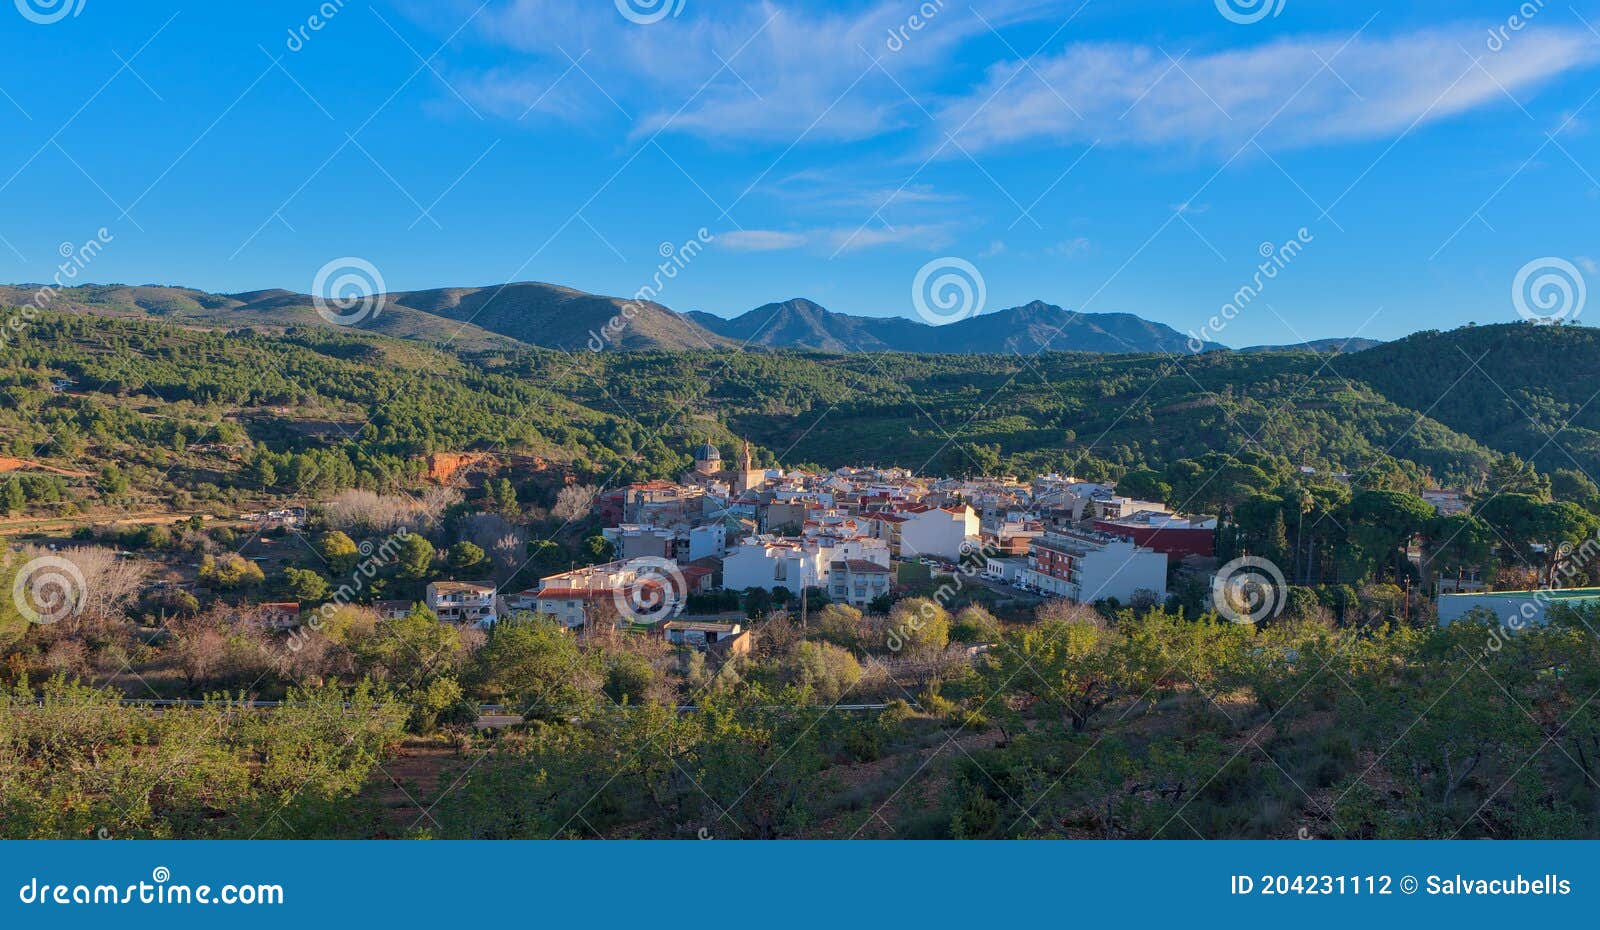 view of navajas, valencian community